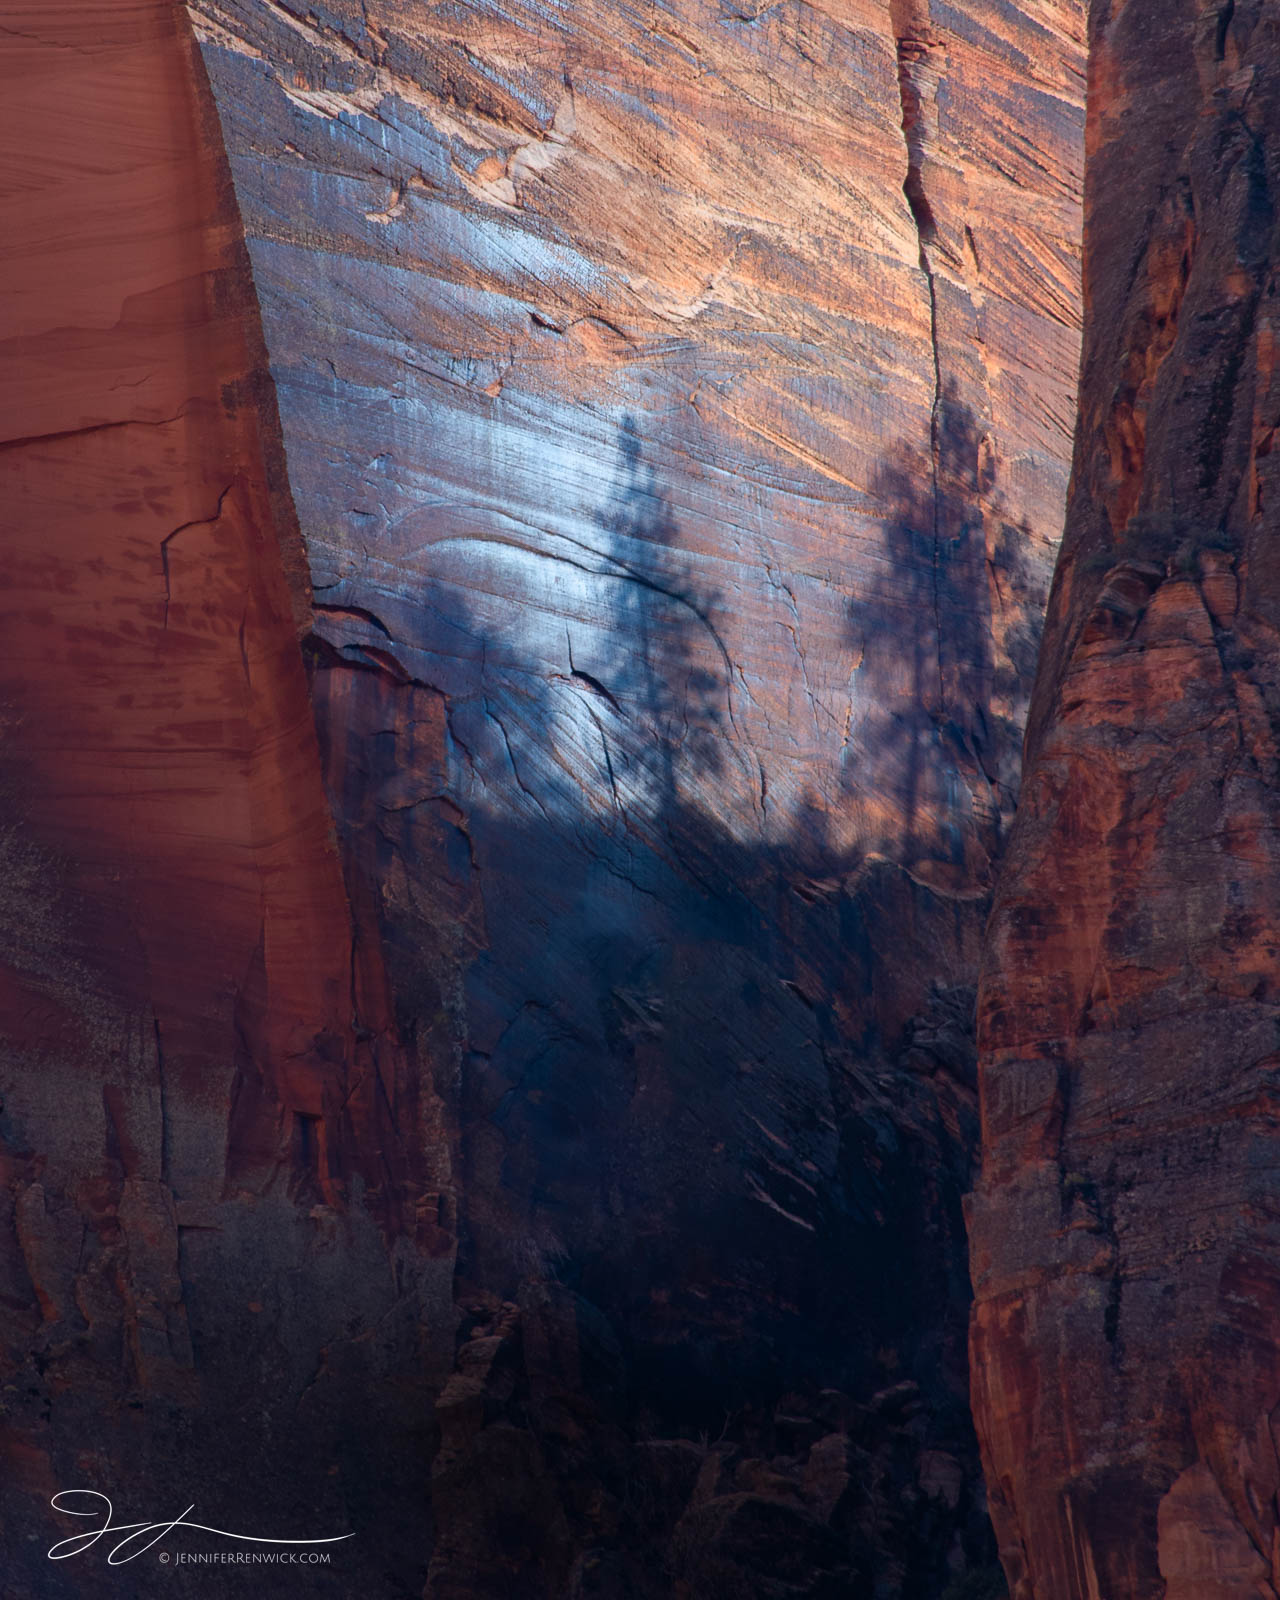 Ephemeral canyon light casts shadows of trees onto a high canyon wall.